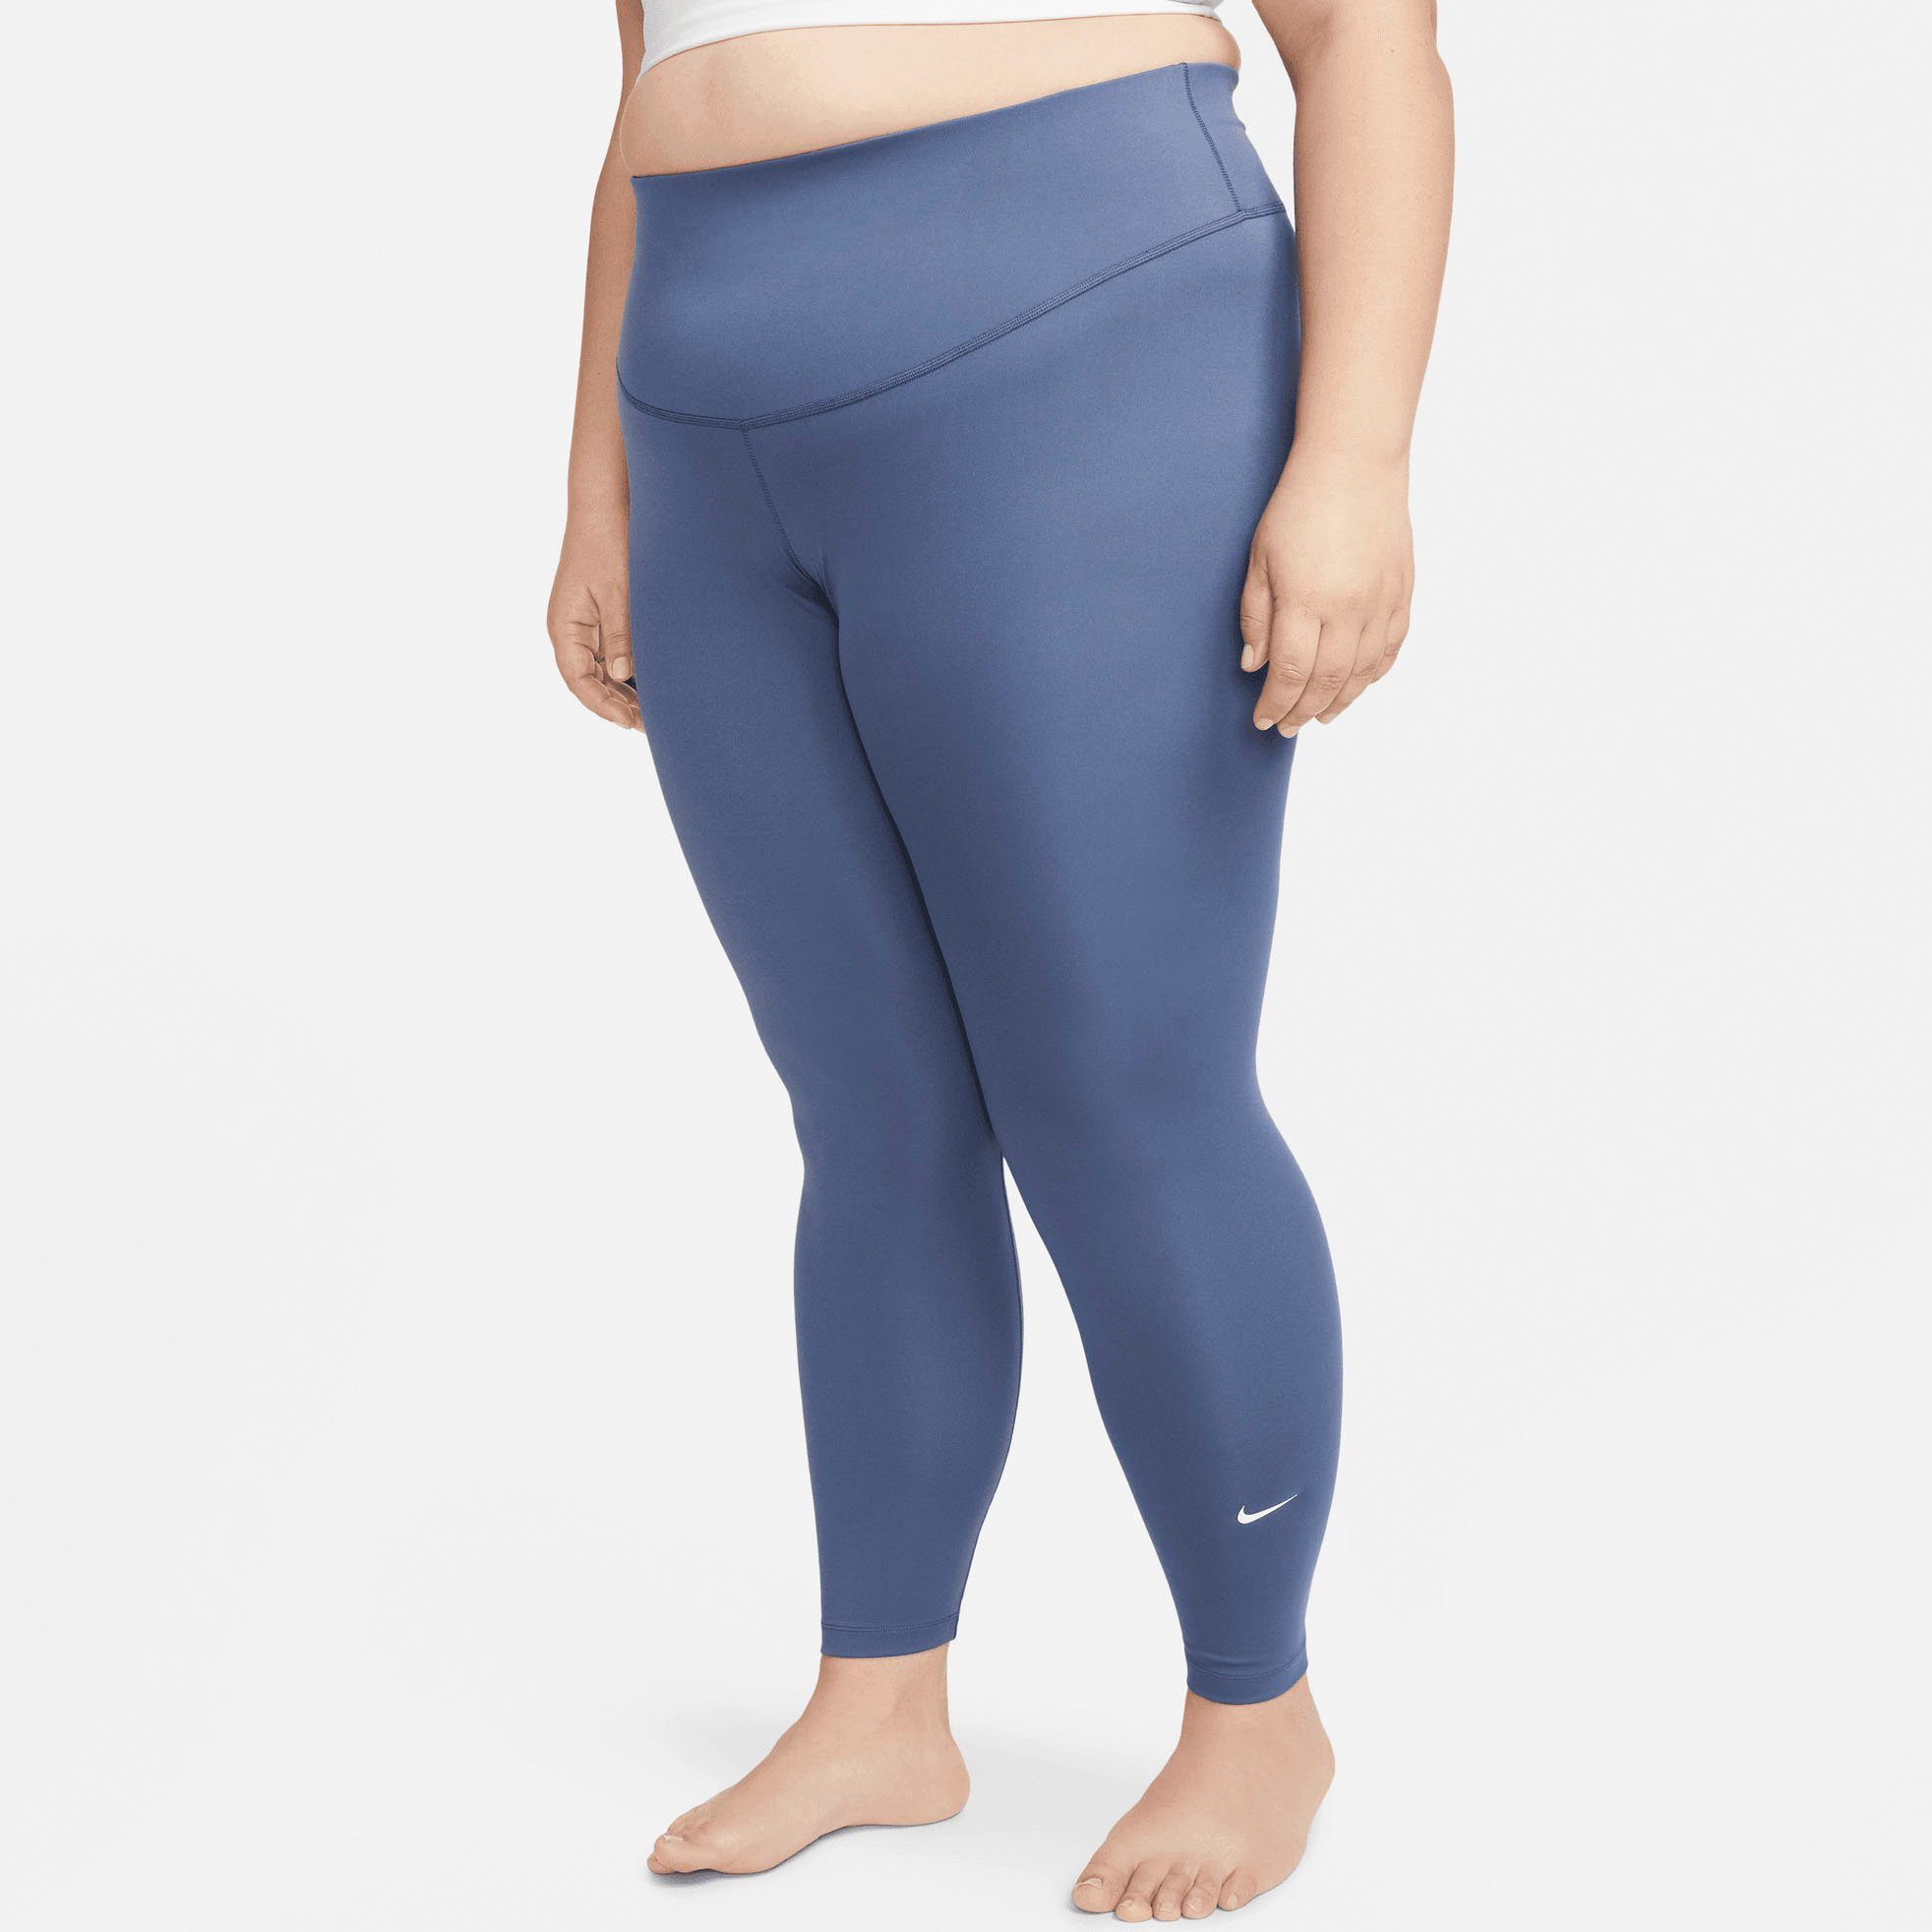 Mid-Rise Nike (Plus One blau Trainingstights Women's Size) Leggings